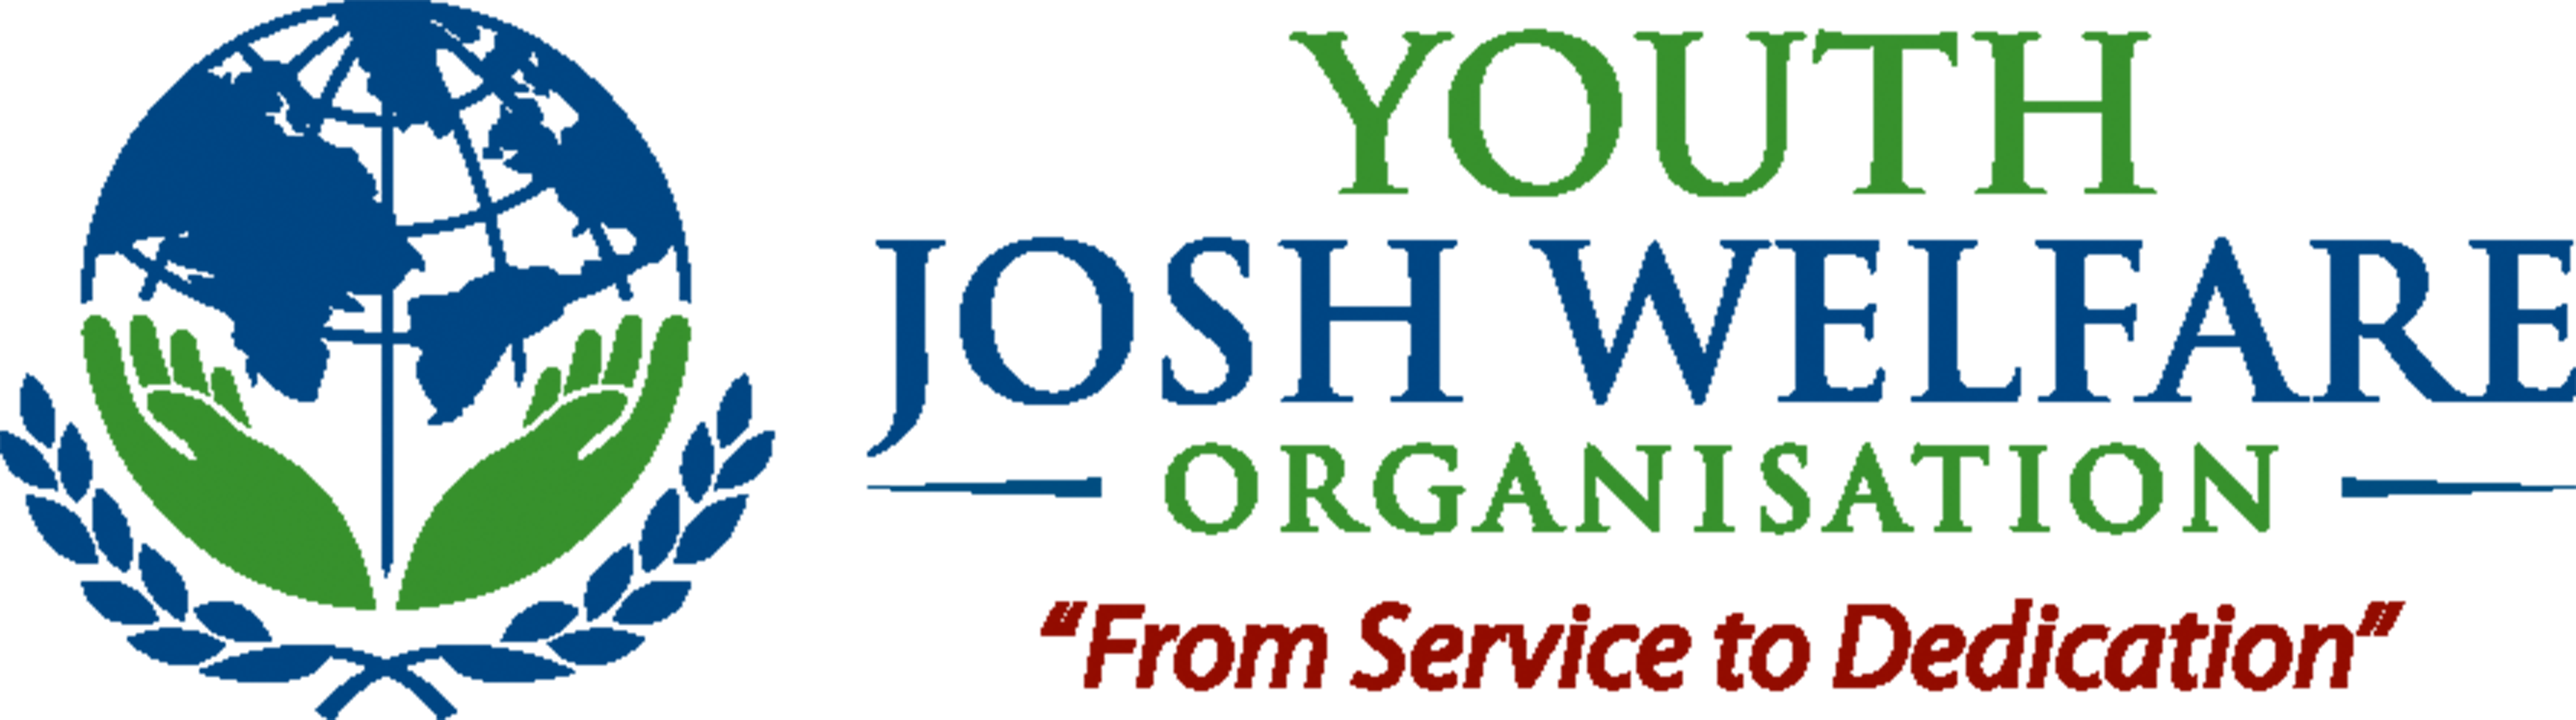 Youth Josh Welfare Organisation